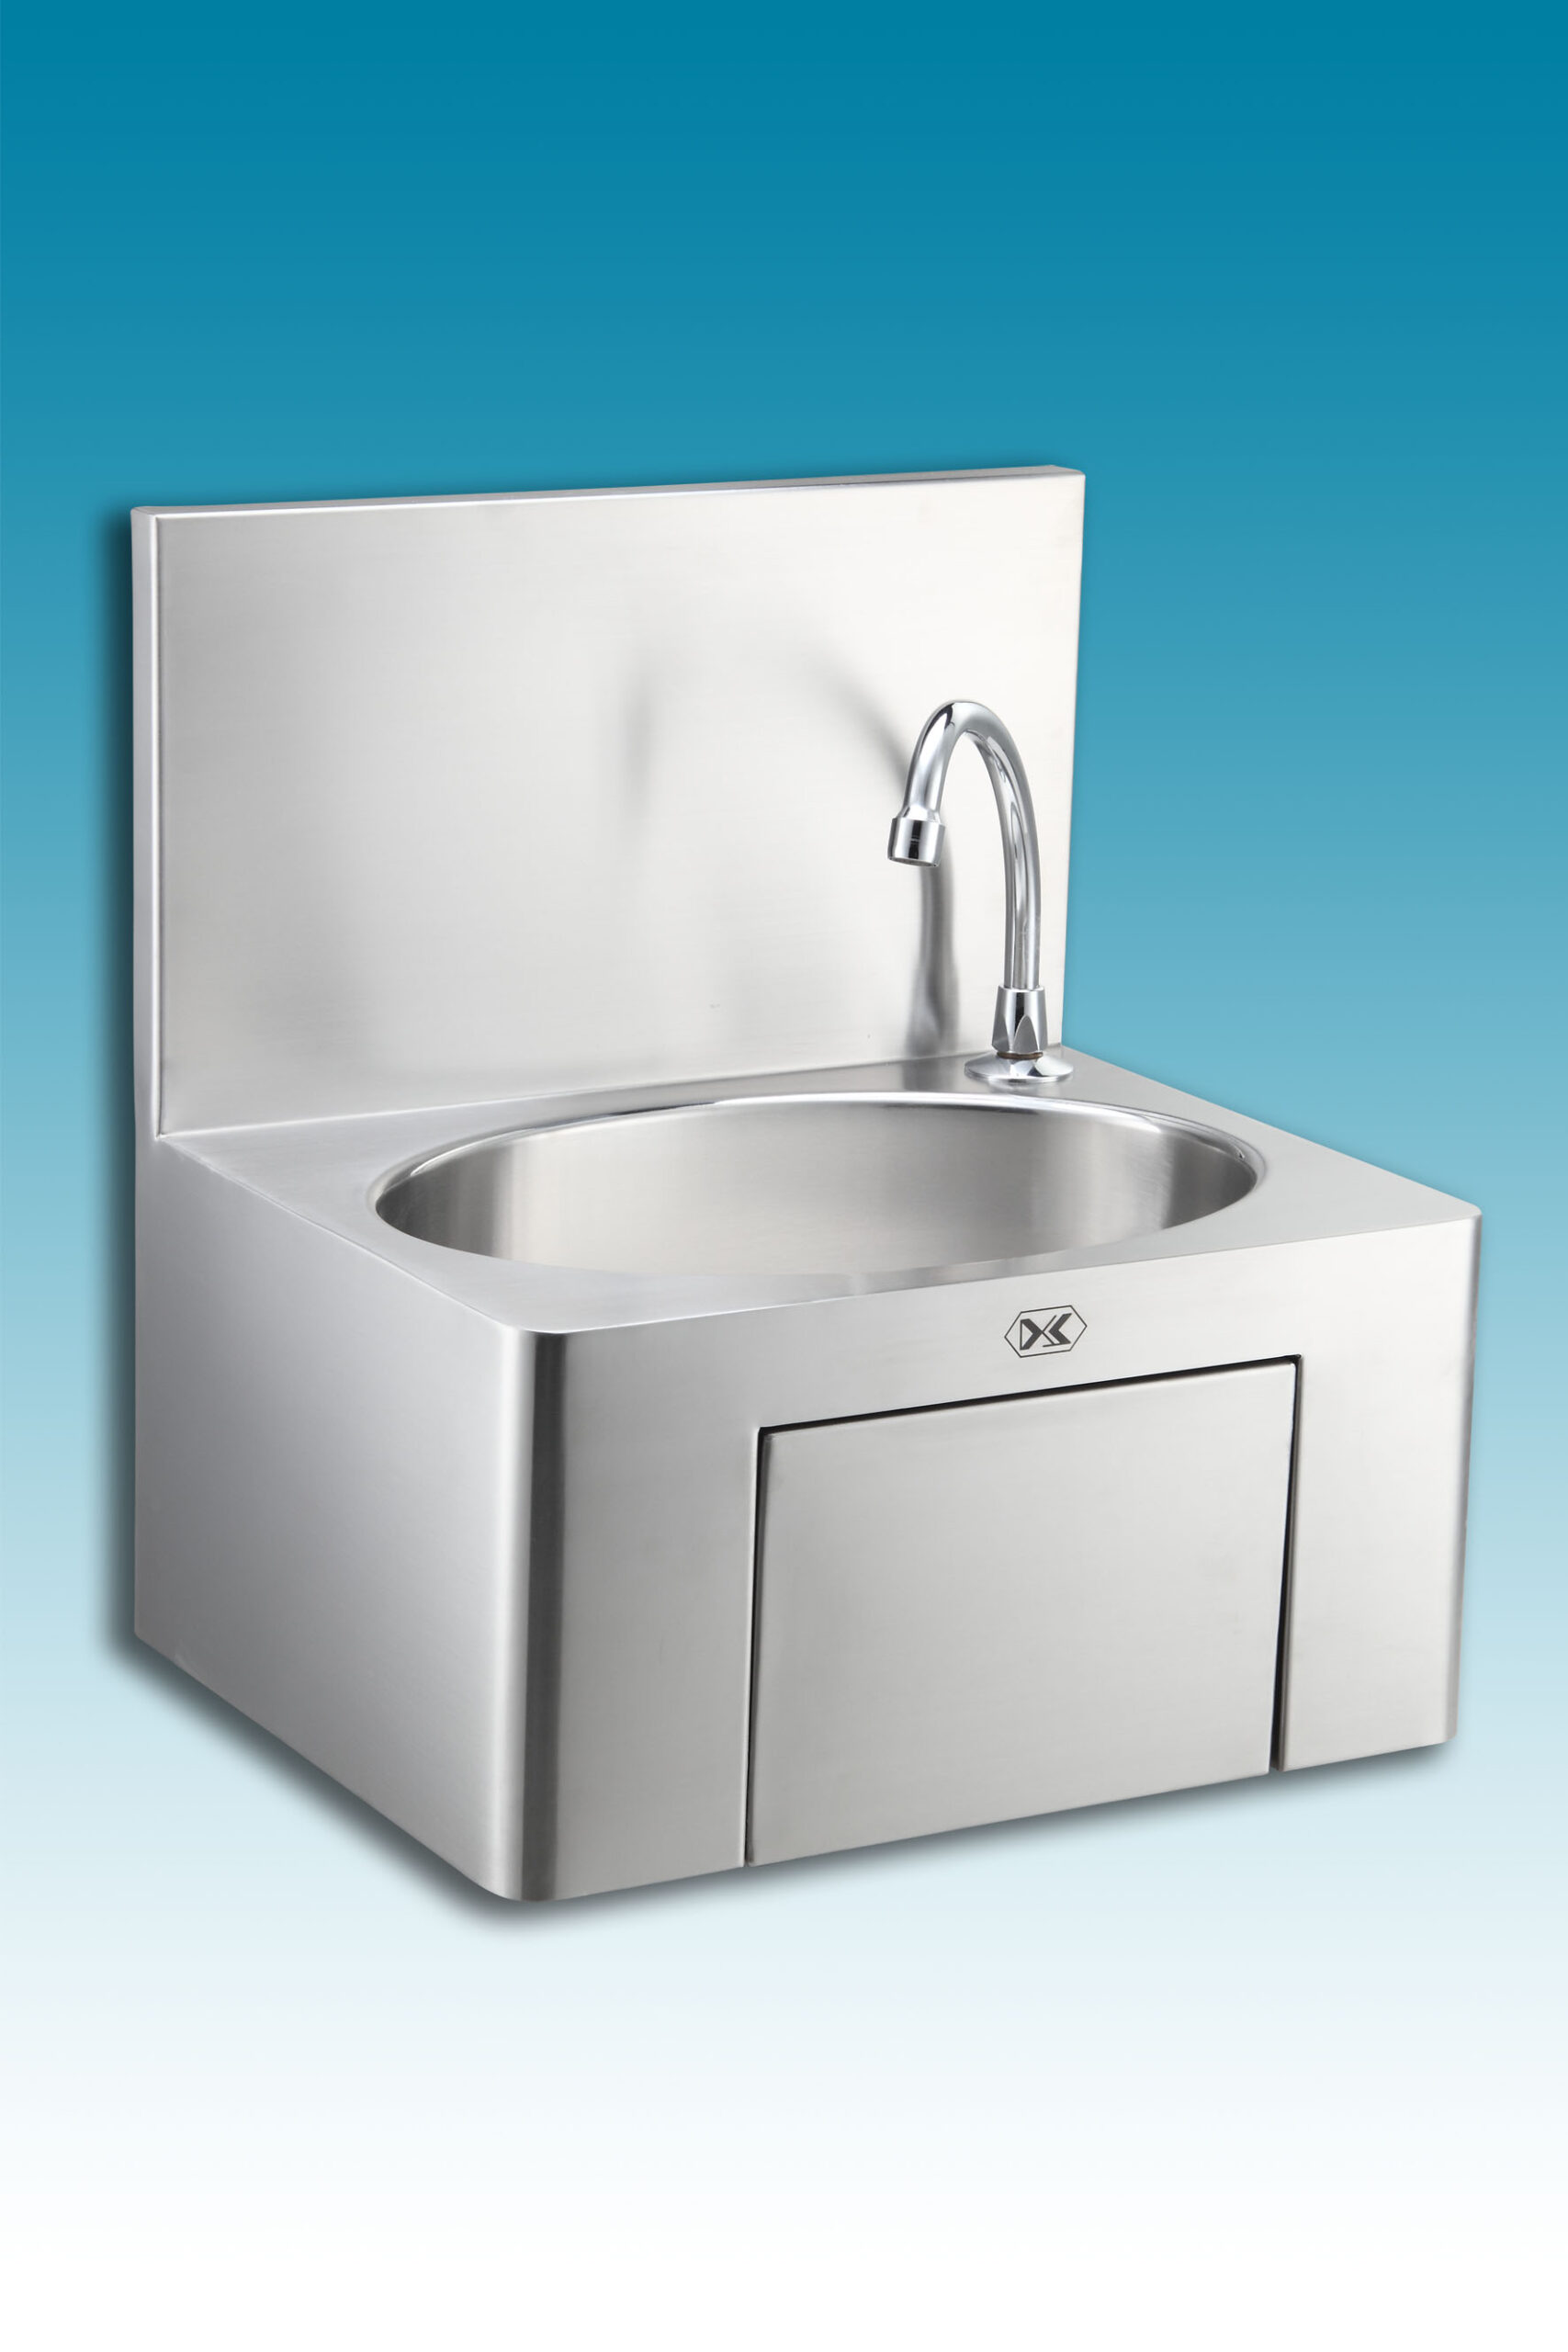 Standard Knee Activated Faucet Hand Sink (Model SS-1018/KA)